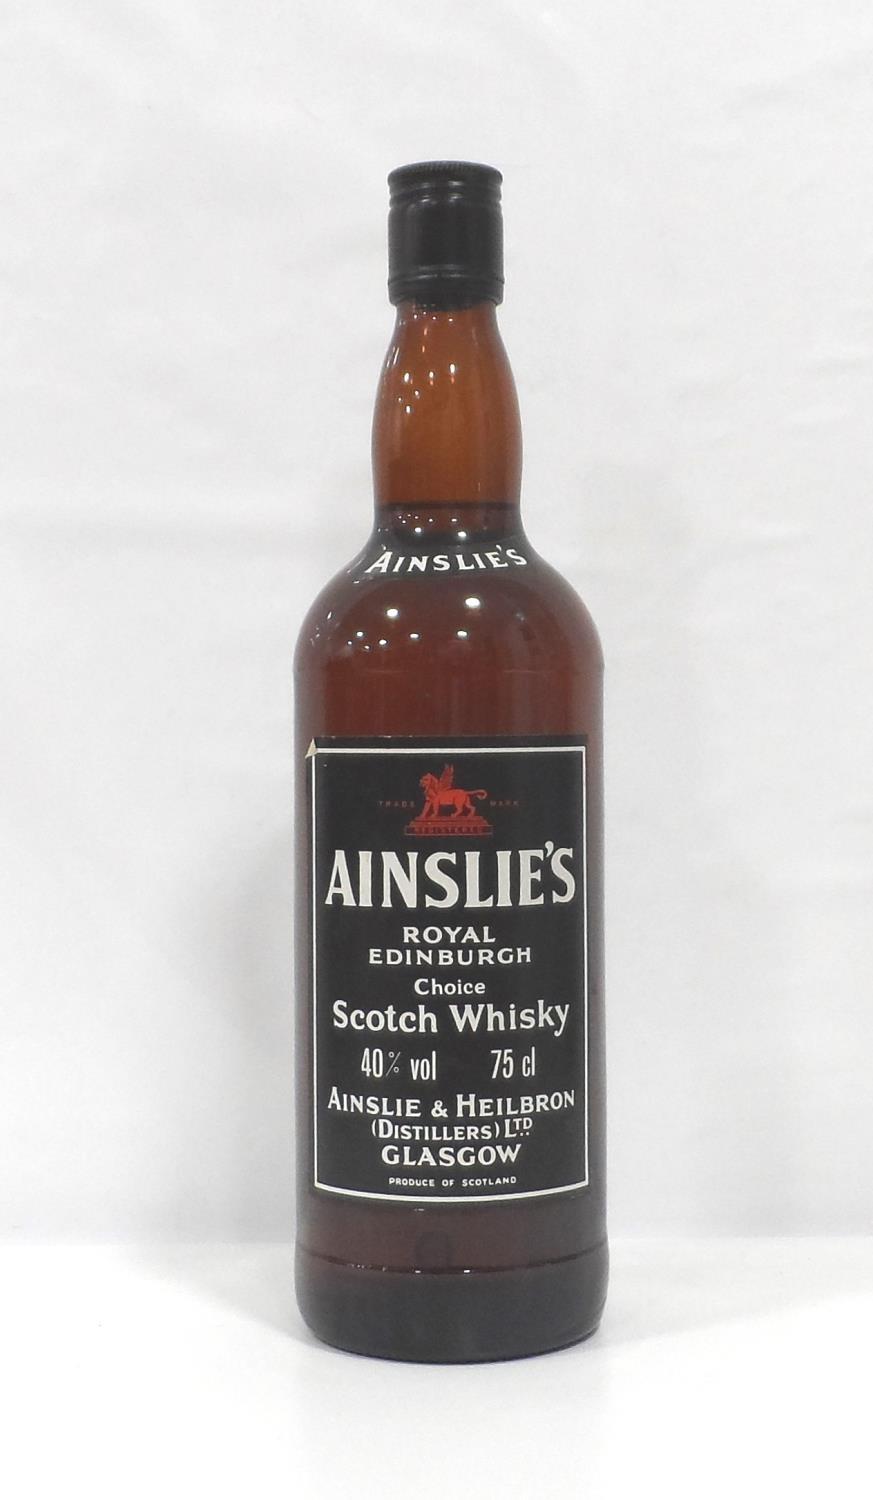 AINSLIE'S ROYAL EDINBURGH A rare blend from Ainslie & Heilbron. Ainslie's Royal Edinburgh Choice